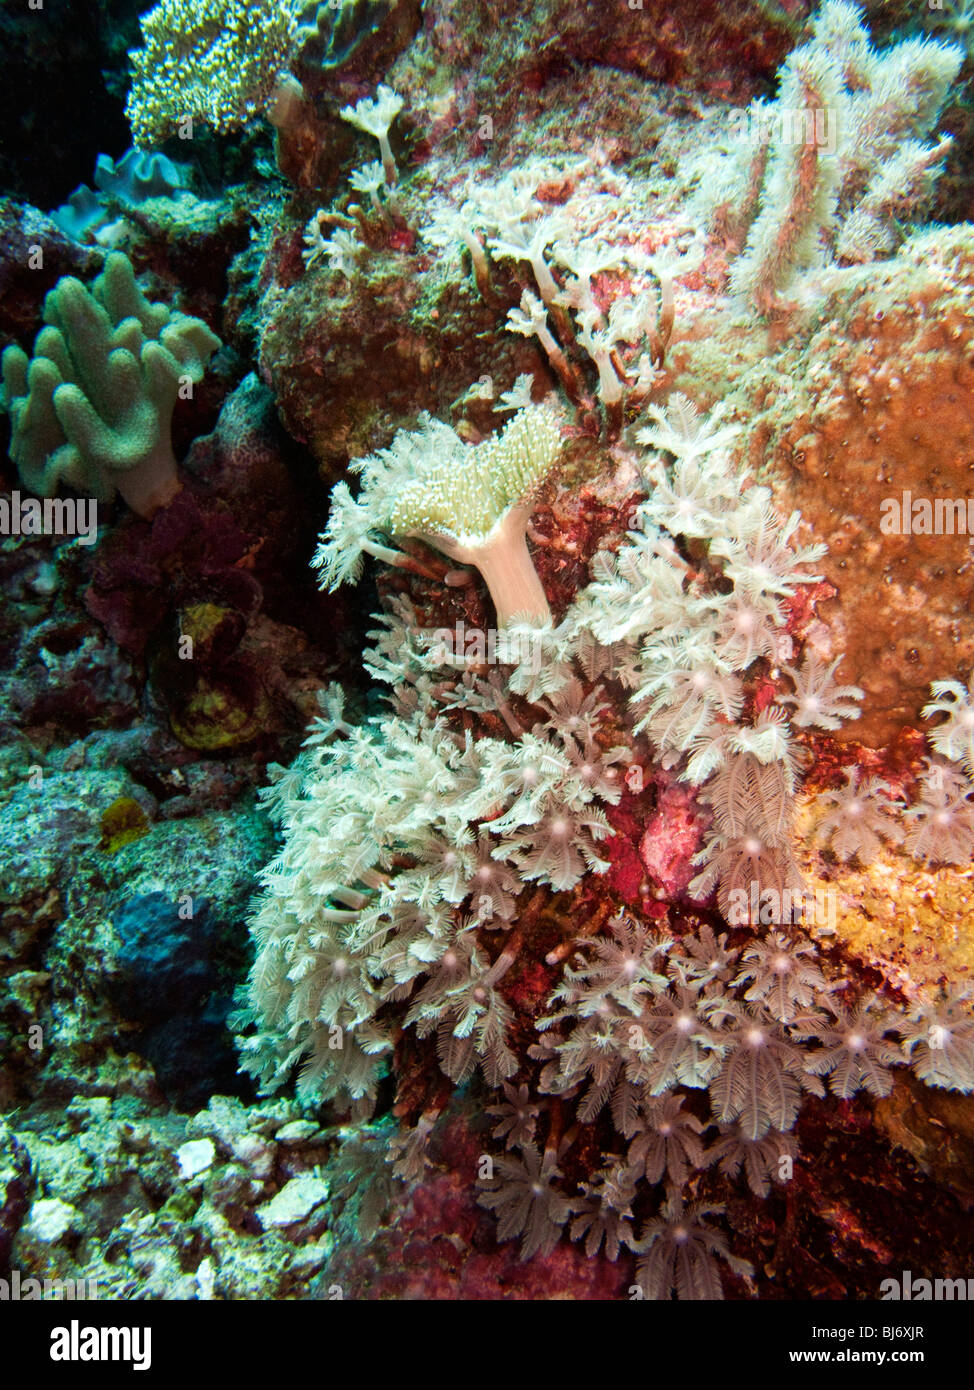 Indonesia, Sulawesi, Wakatobi National Park, underwater, colourful soft corals on the reef edge Stock Photo